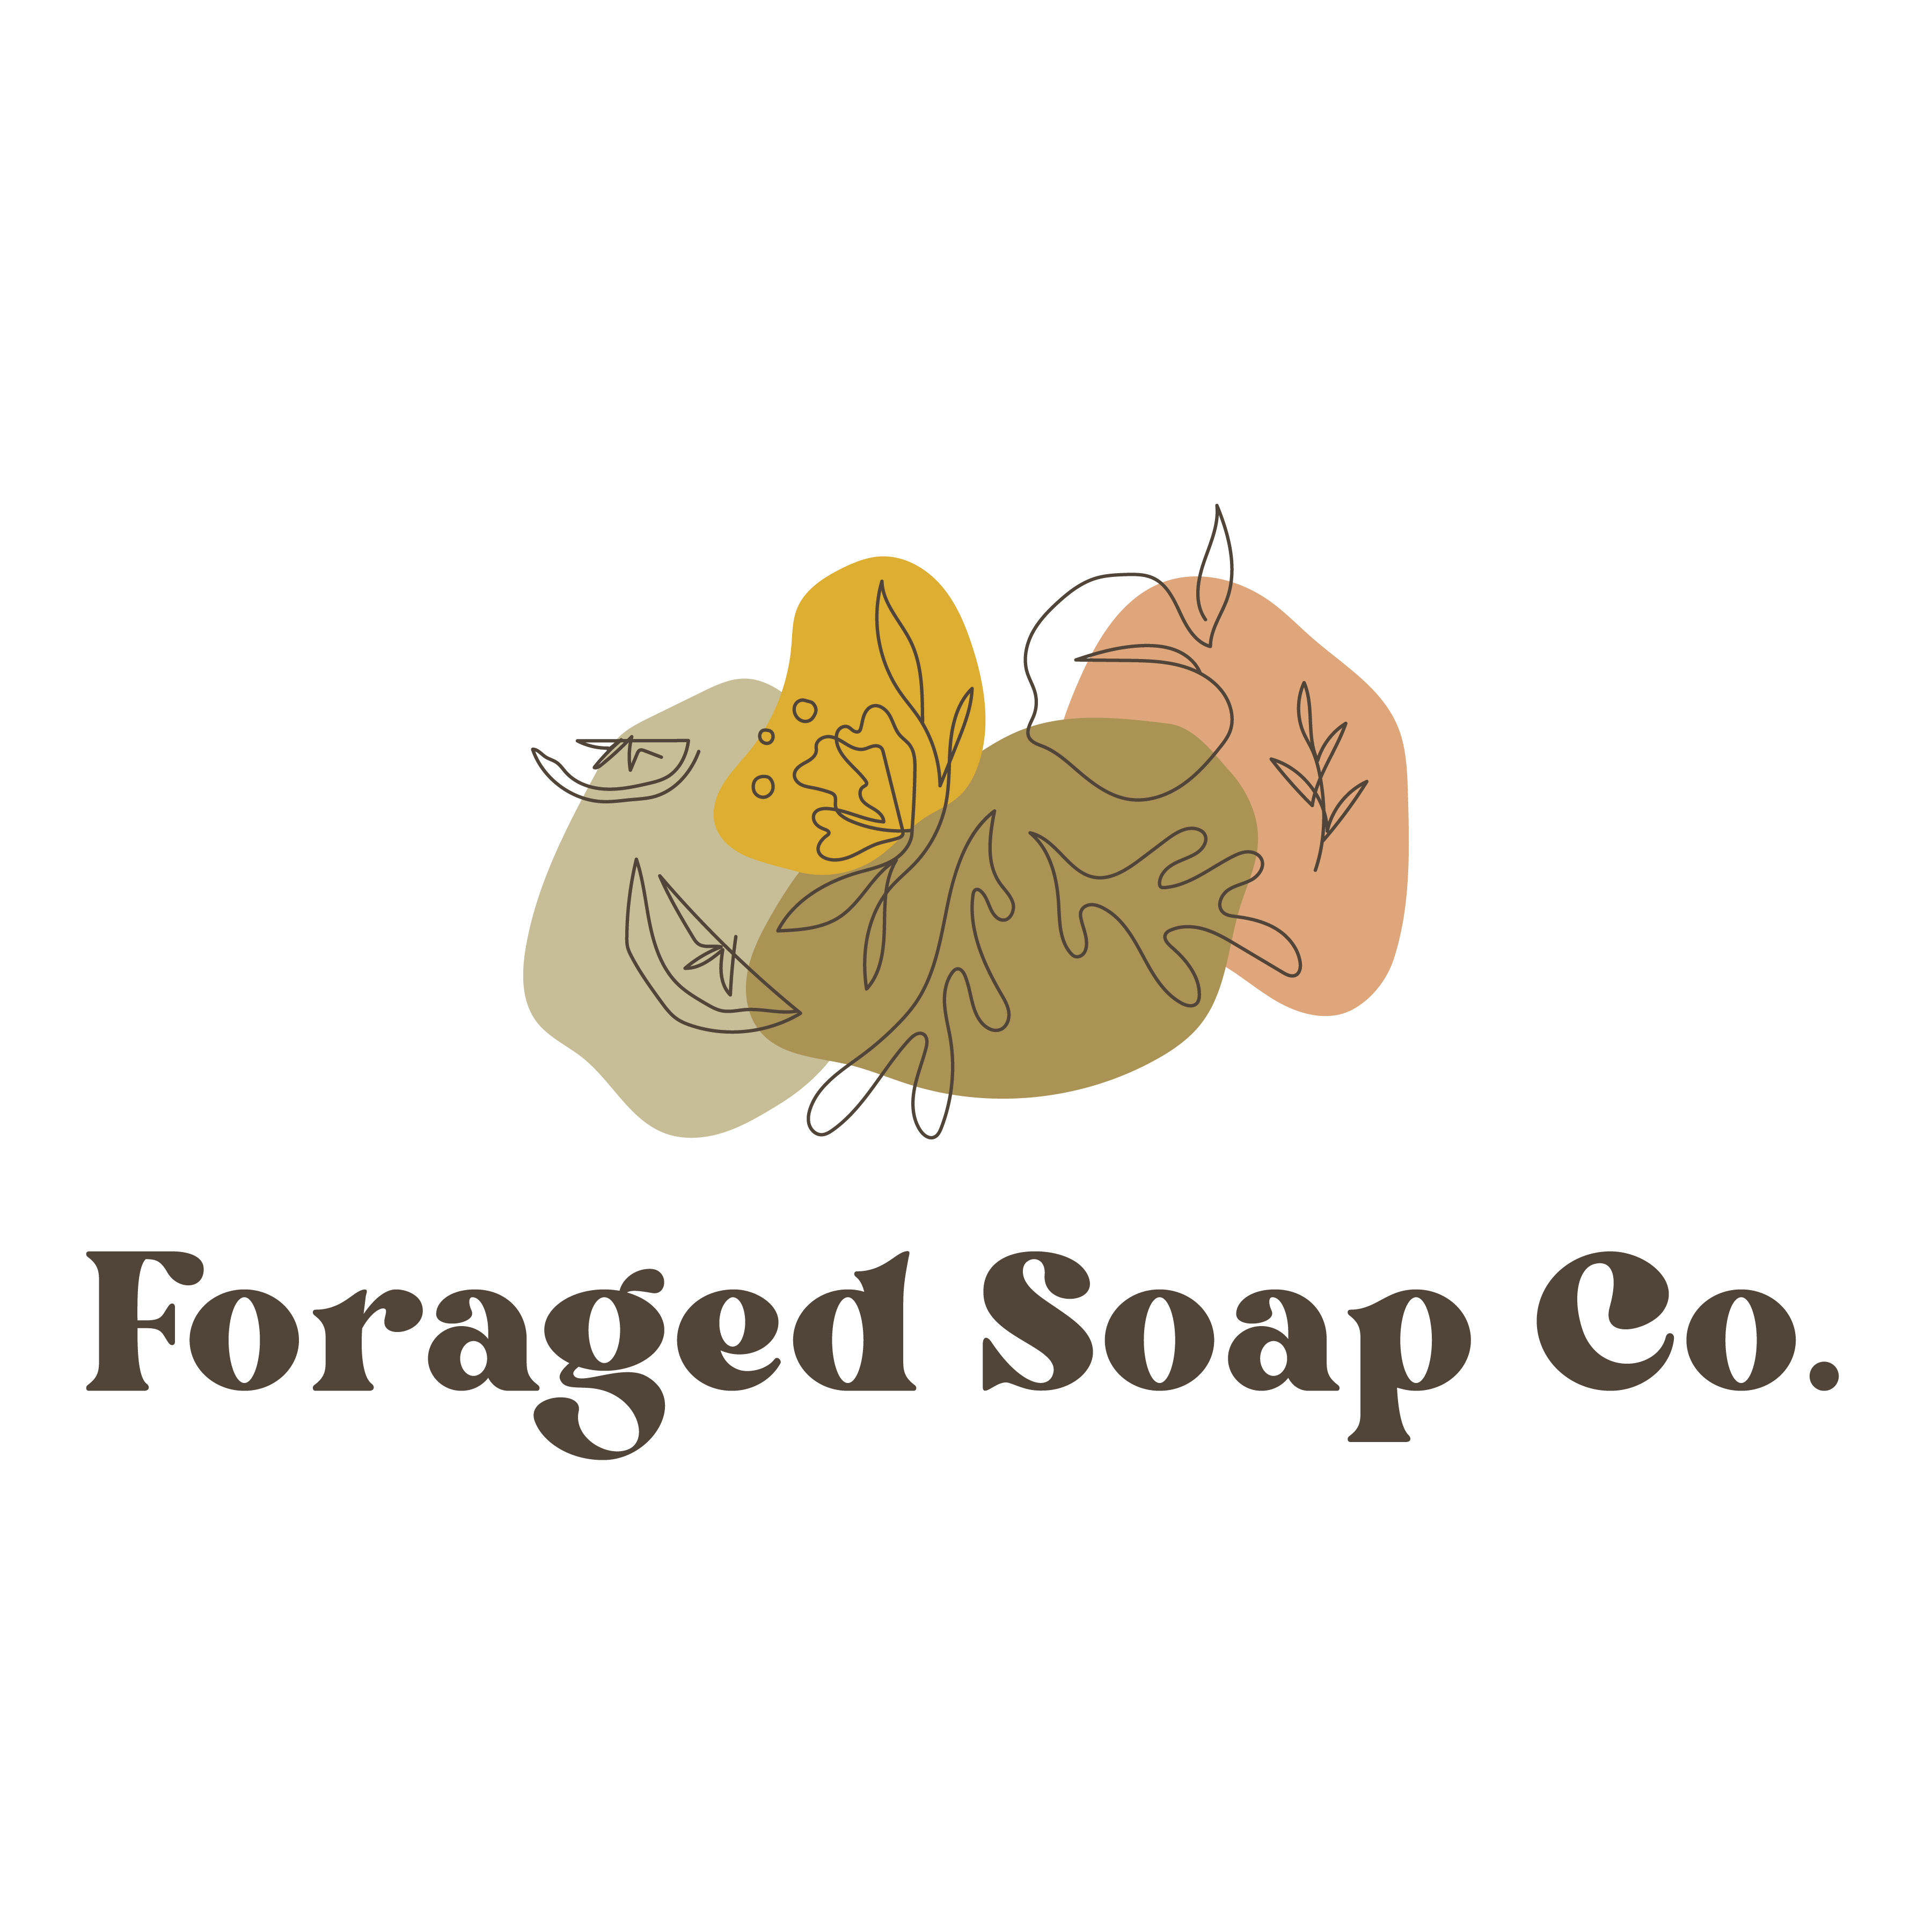 Forest Fir - Bearsville Soap Company